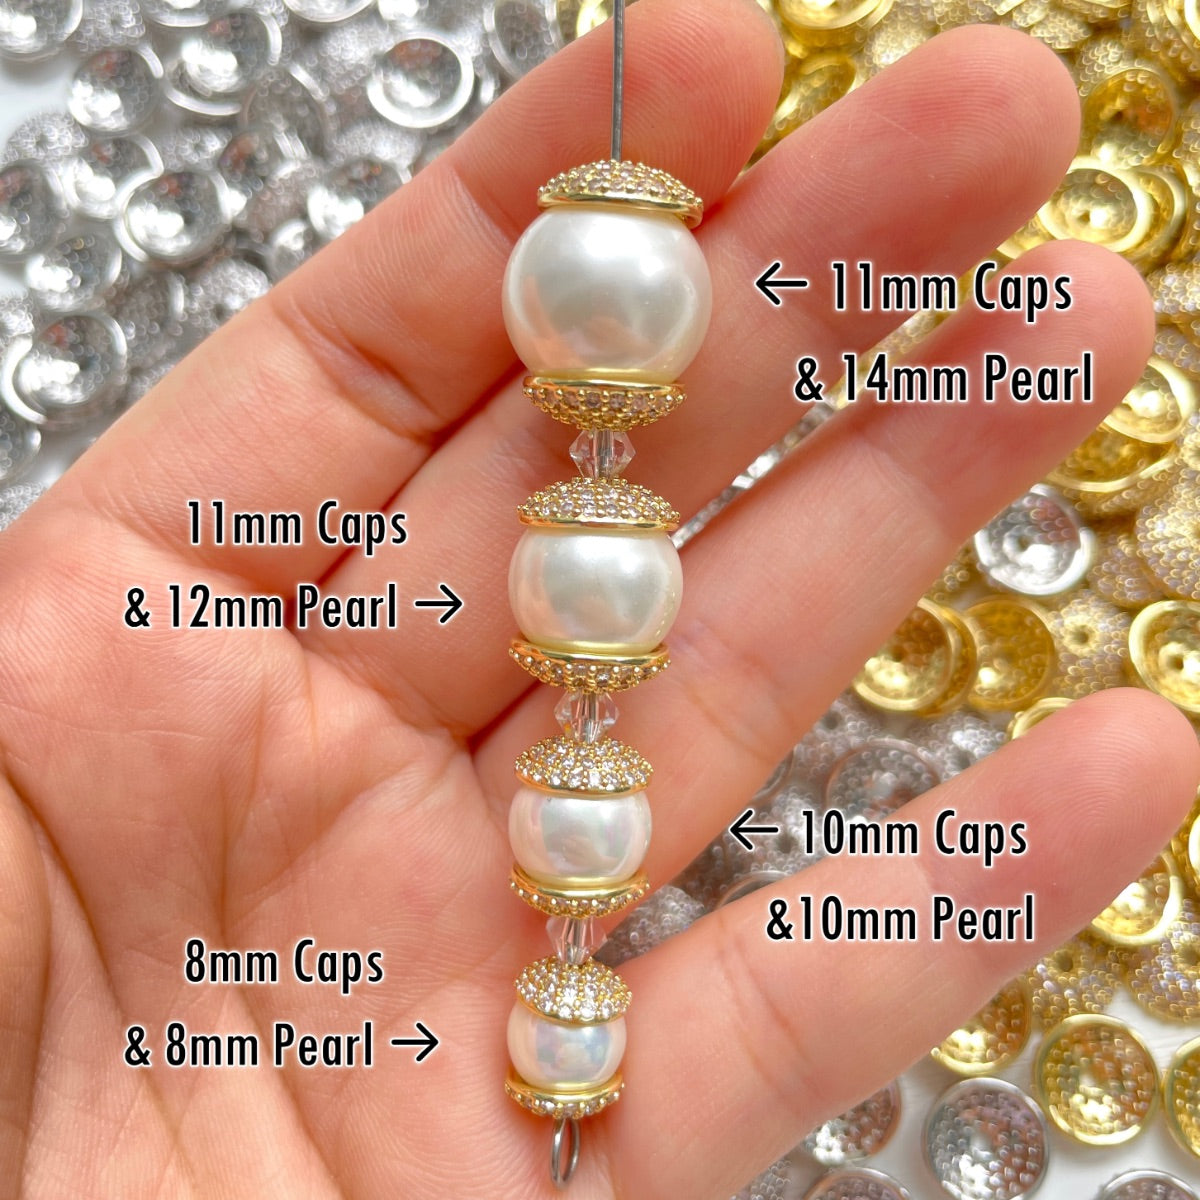 20pcs/lot 8/10/11mm Half Round CZ Paved Beads Caps Spacers CZ Paved Spacers Beads Caps New Spacers Arrivals Charms Beads Beyond